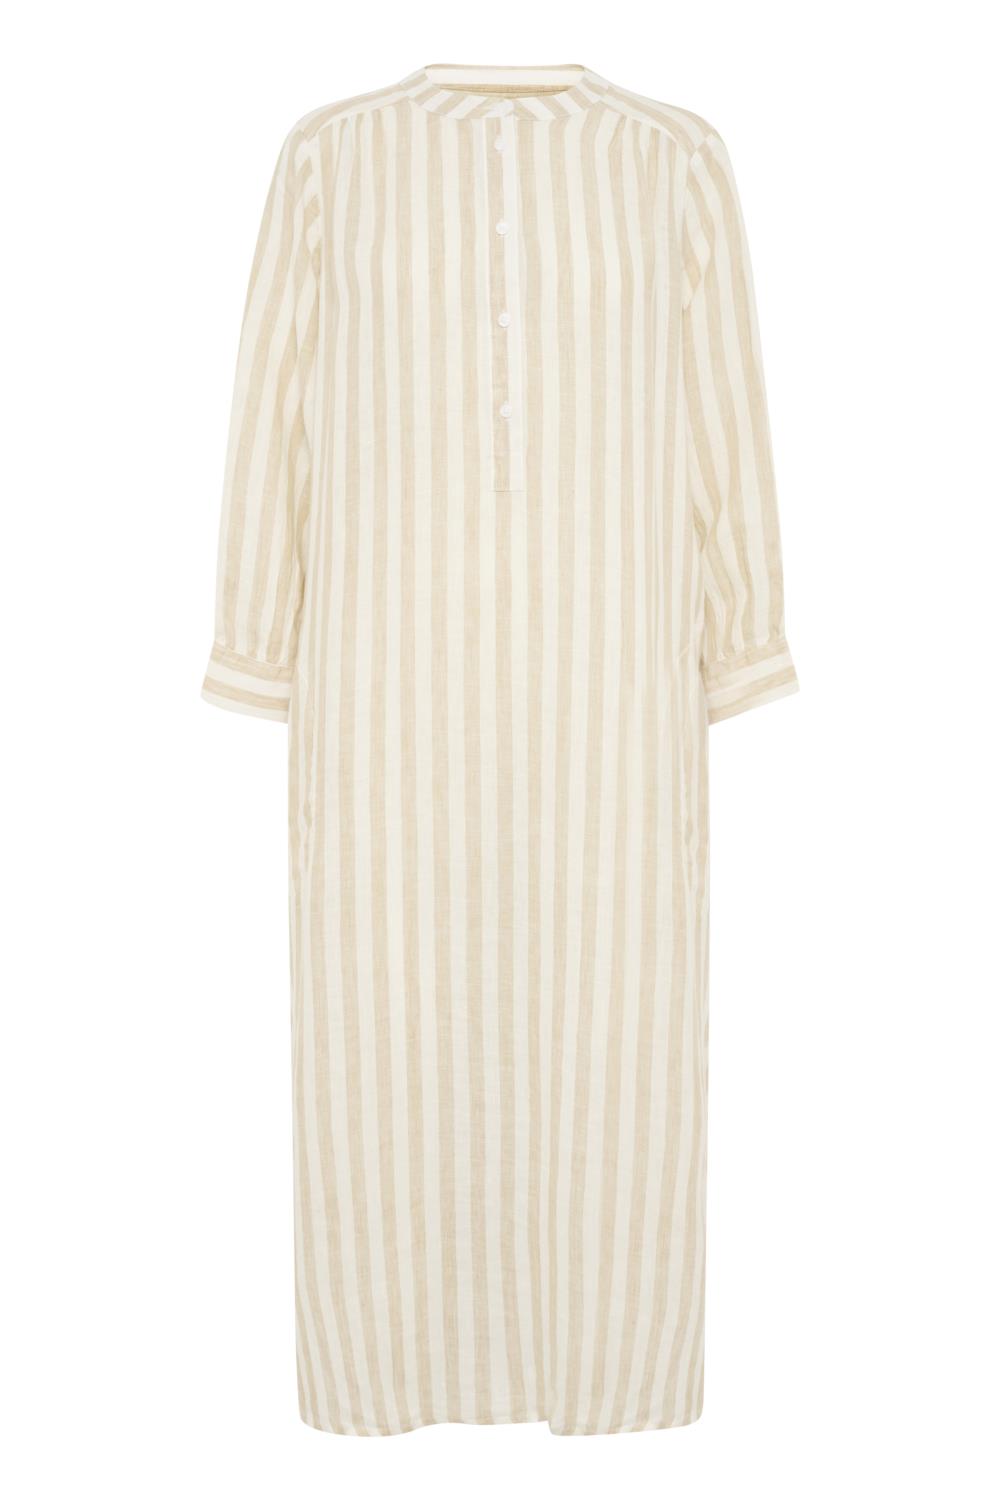 Part Two Alia Dress, Pure Linen, beige/stripet